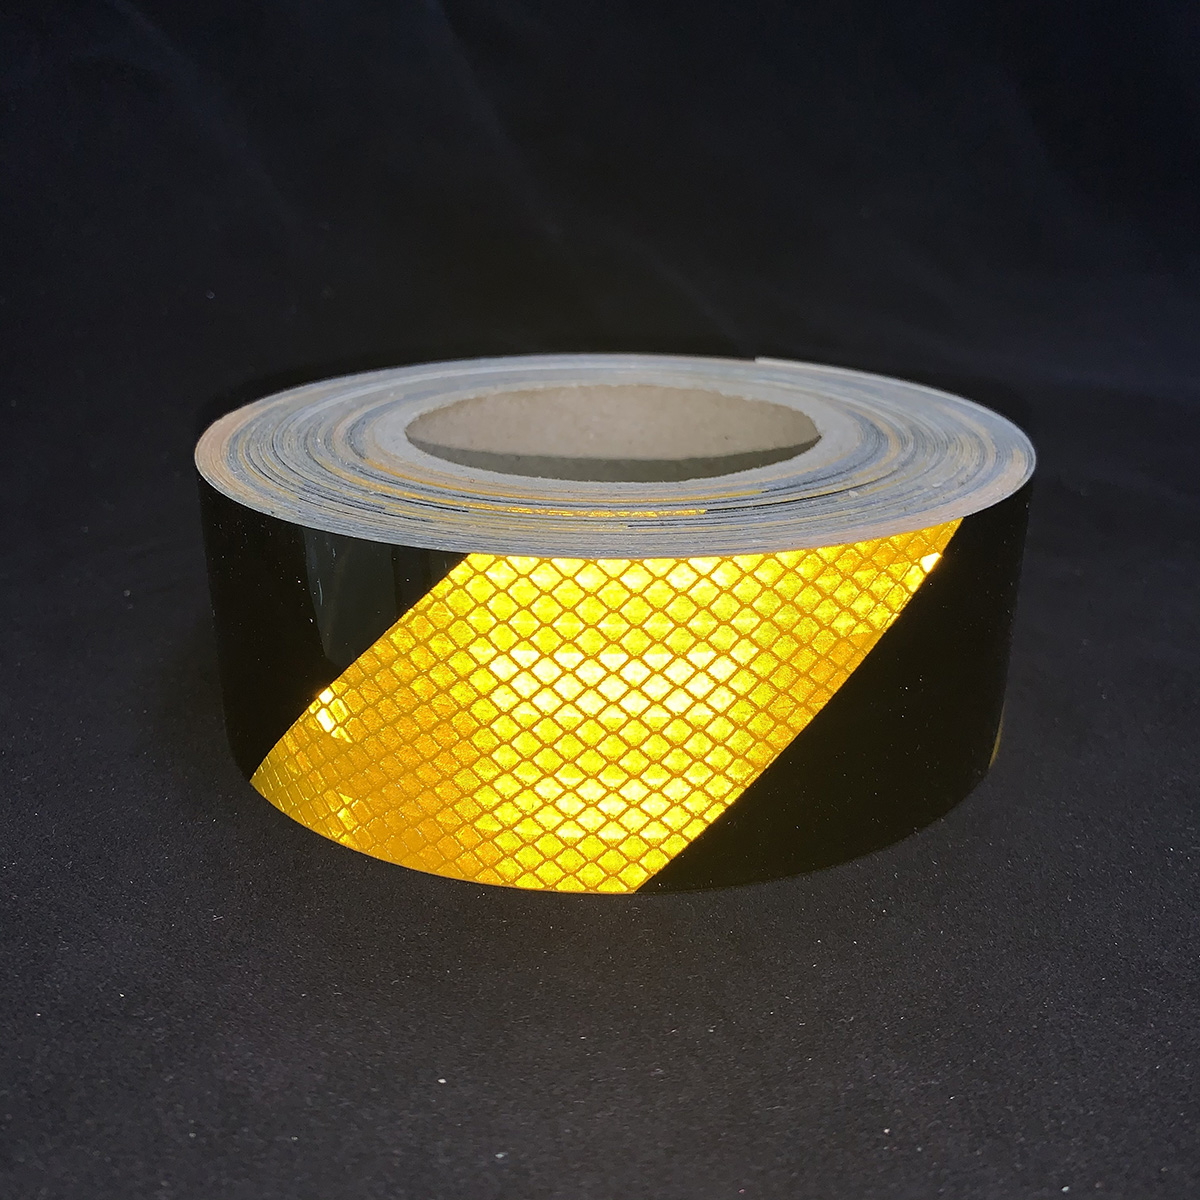 5cm*25m PET Micro-Prismatic Twill Reflective Tape Golden+Black